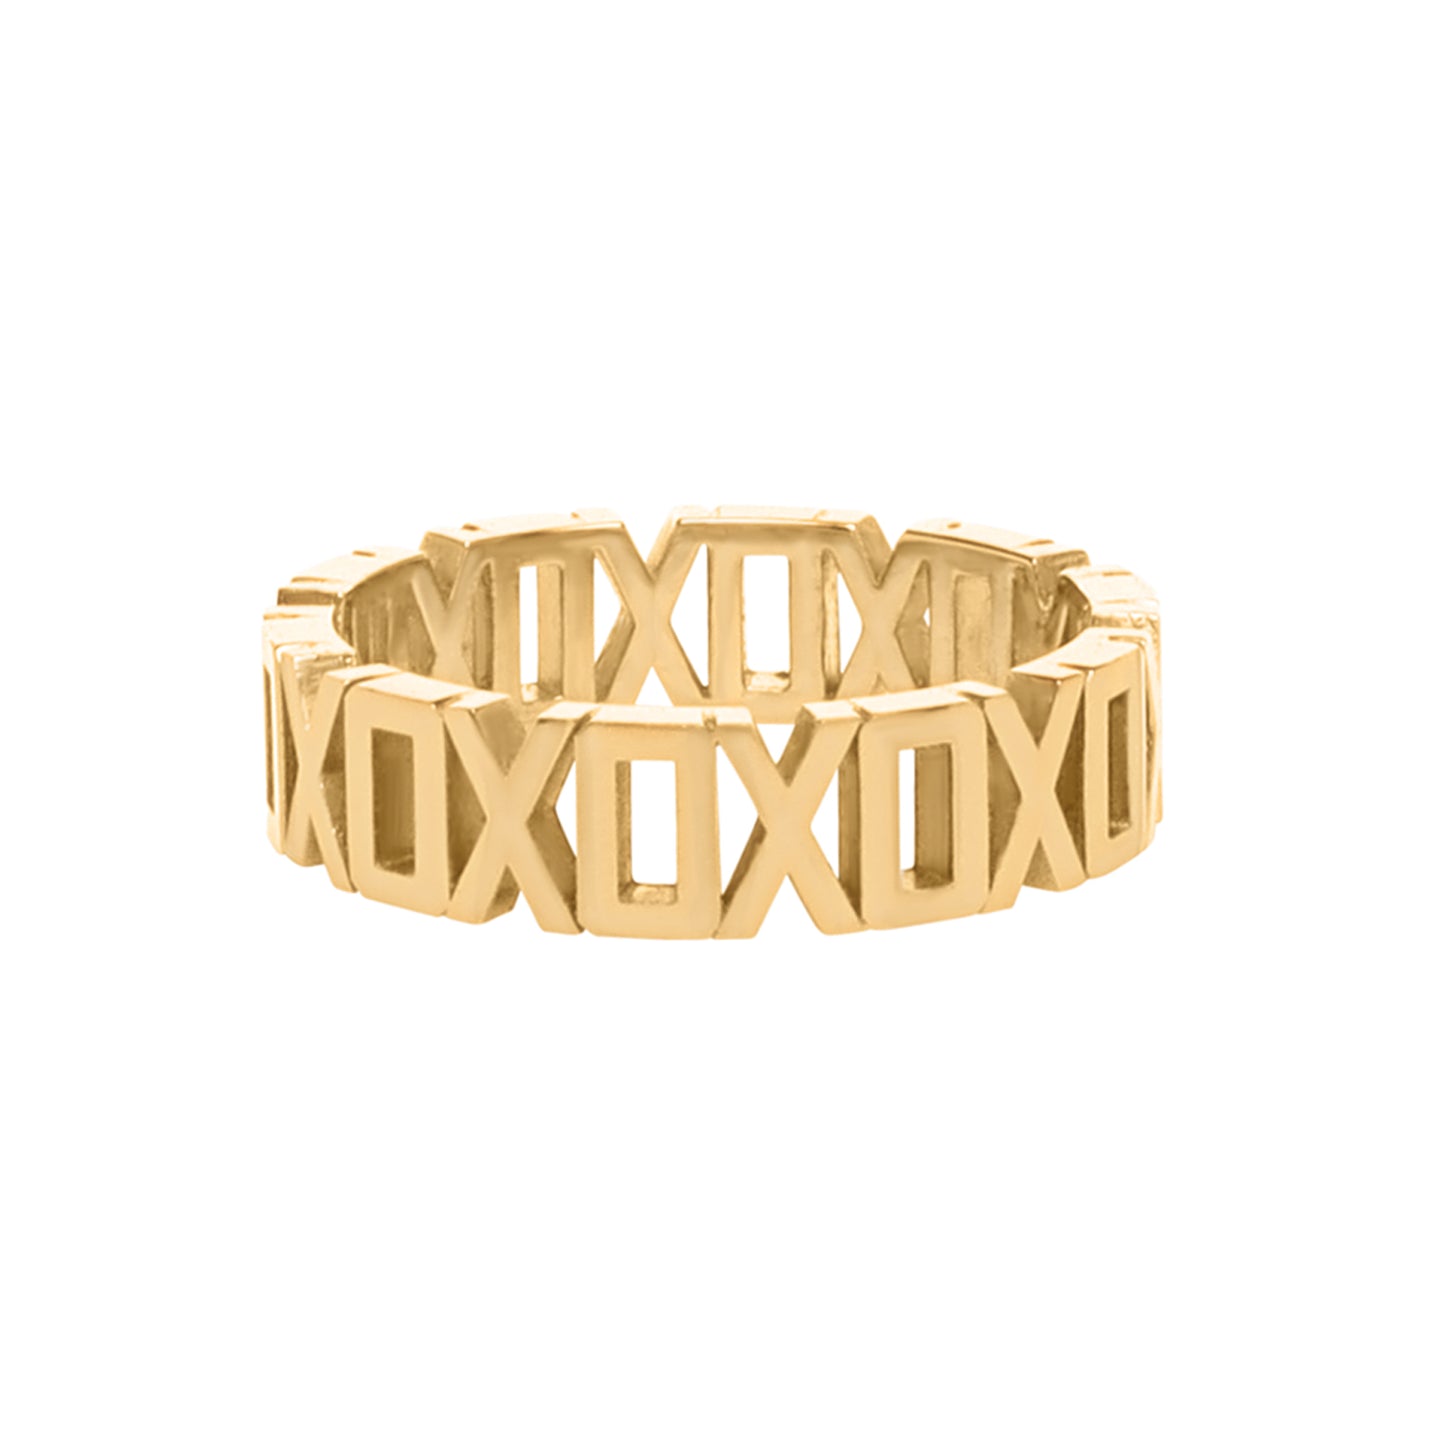 The Say Anything XOXO ring